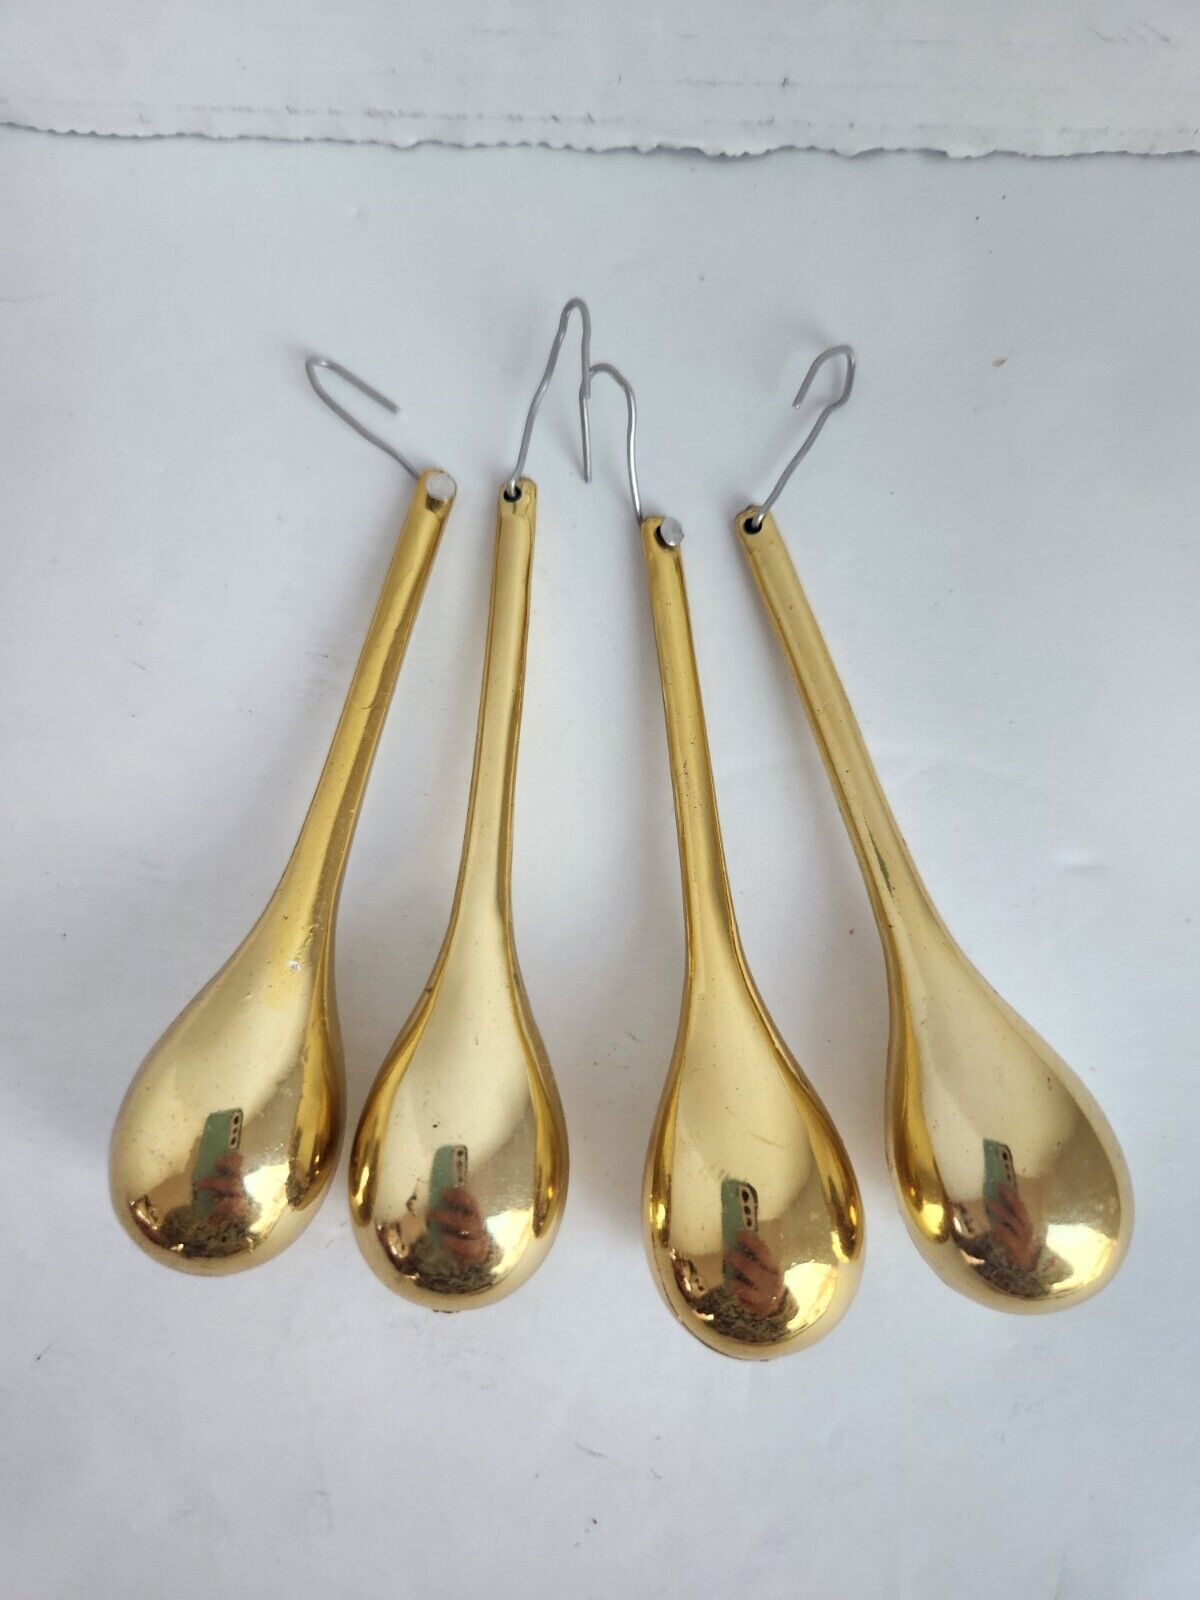 Lot of 4 Vintage Teardrop Christmas Ornaments Gold Metallic 3” Long Plastic 